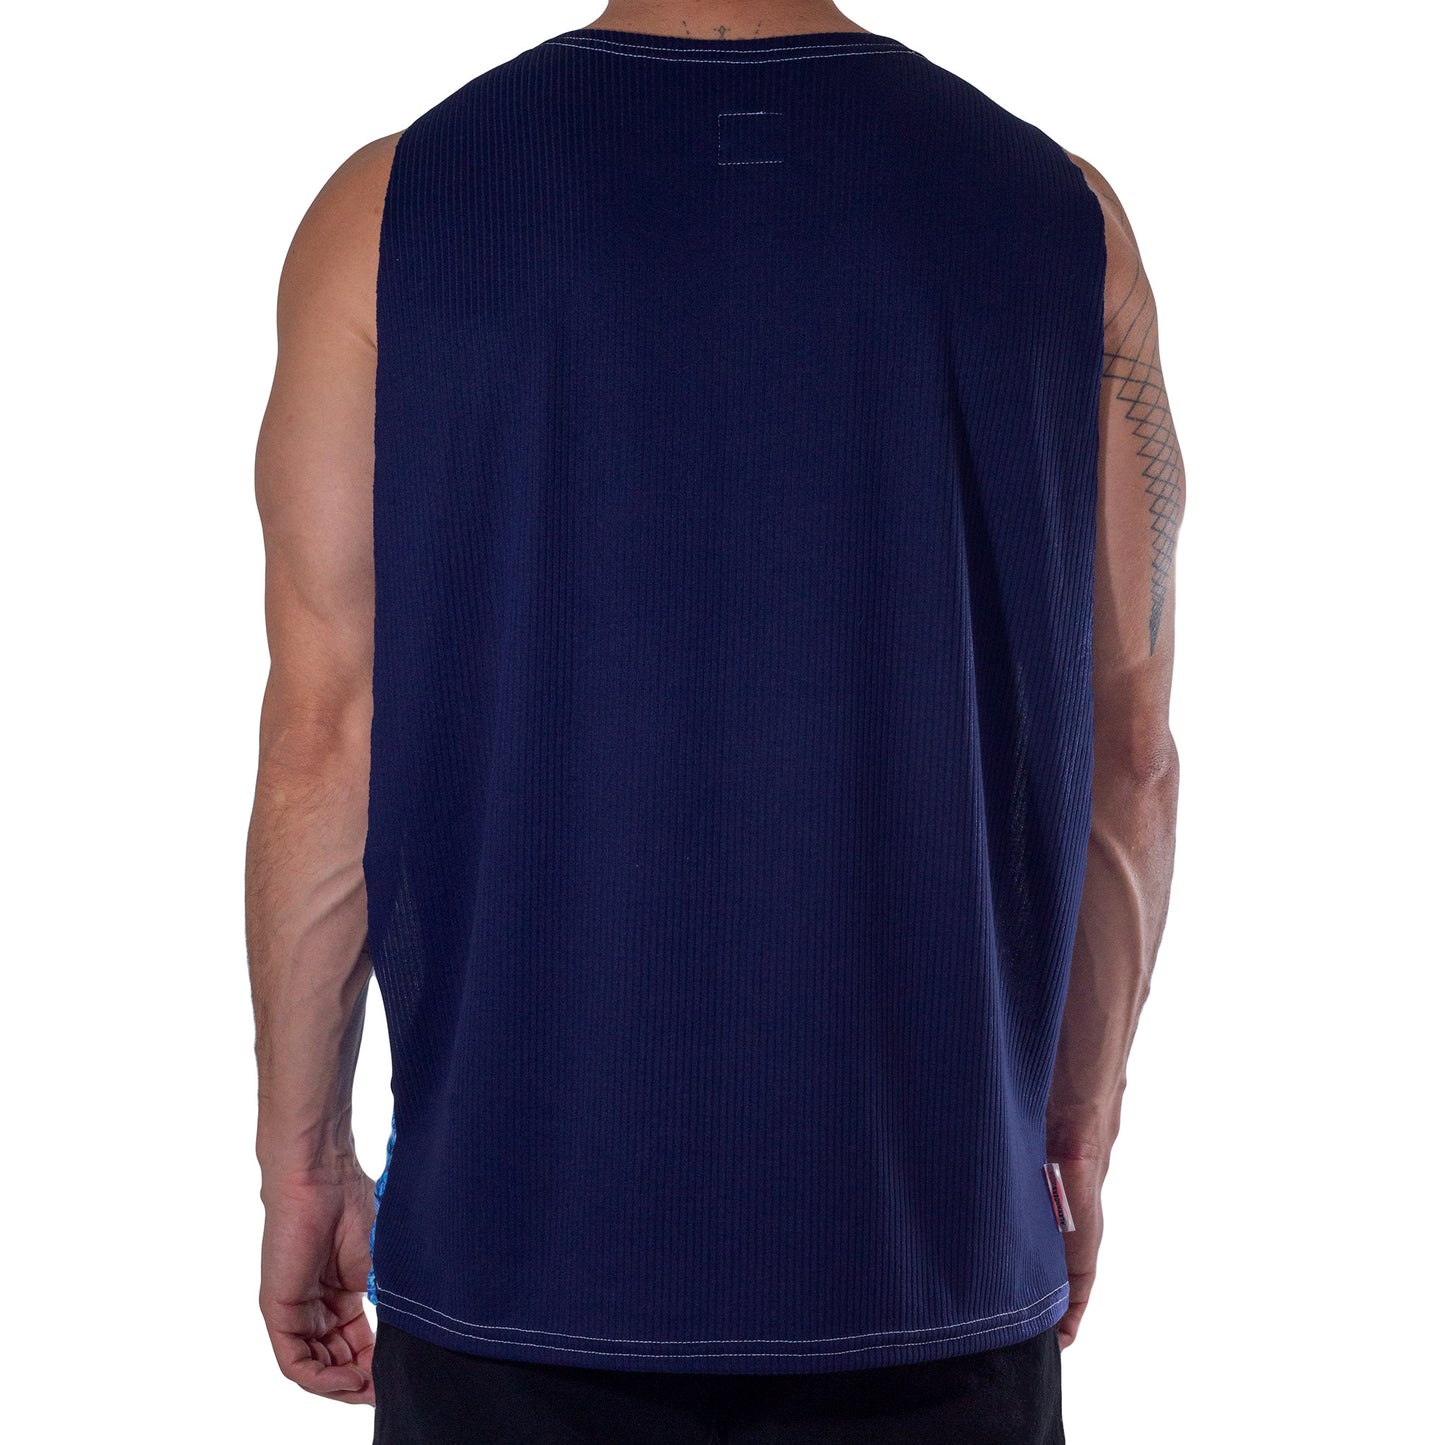 LS0003 LongSleeve Navy Sport T-Shirt Cuzama Print skinit